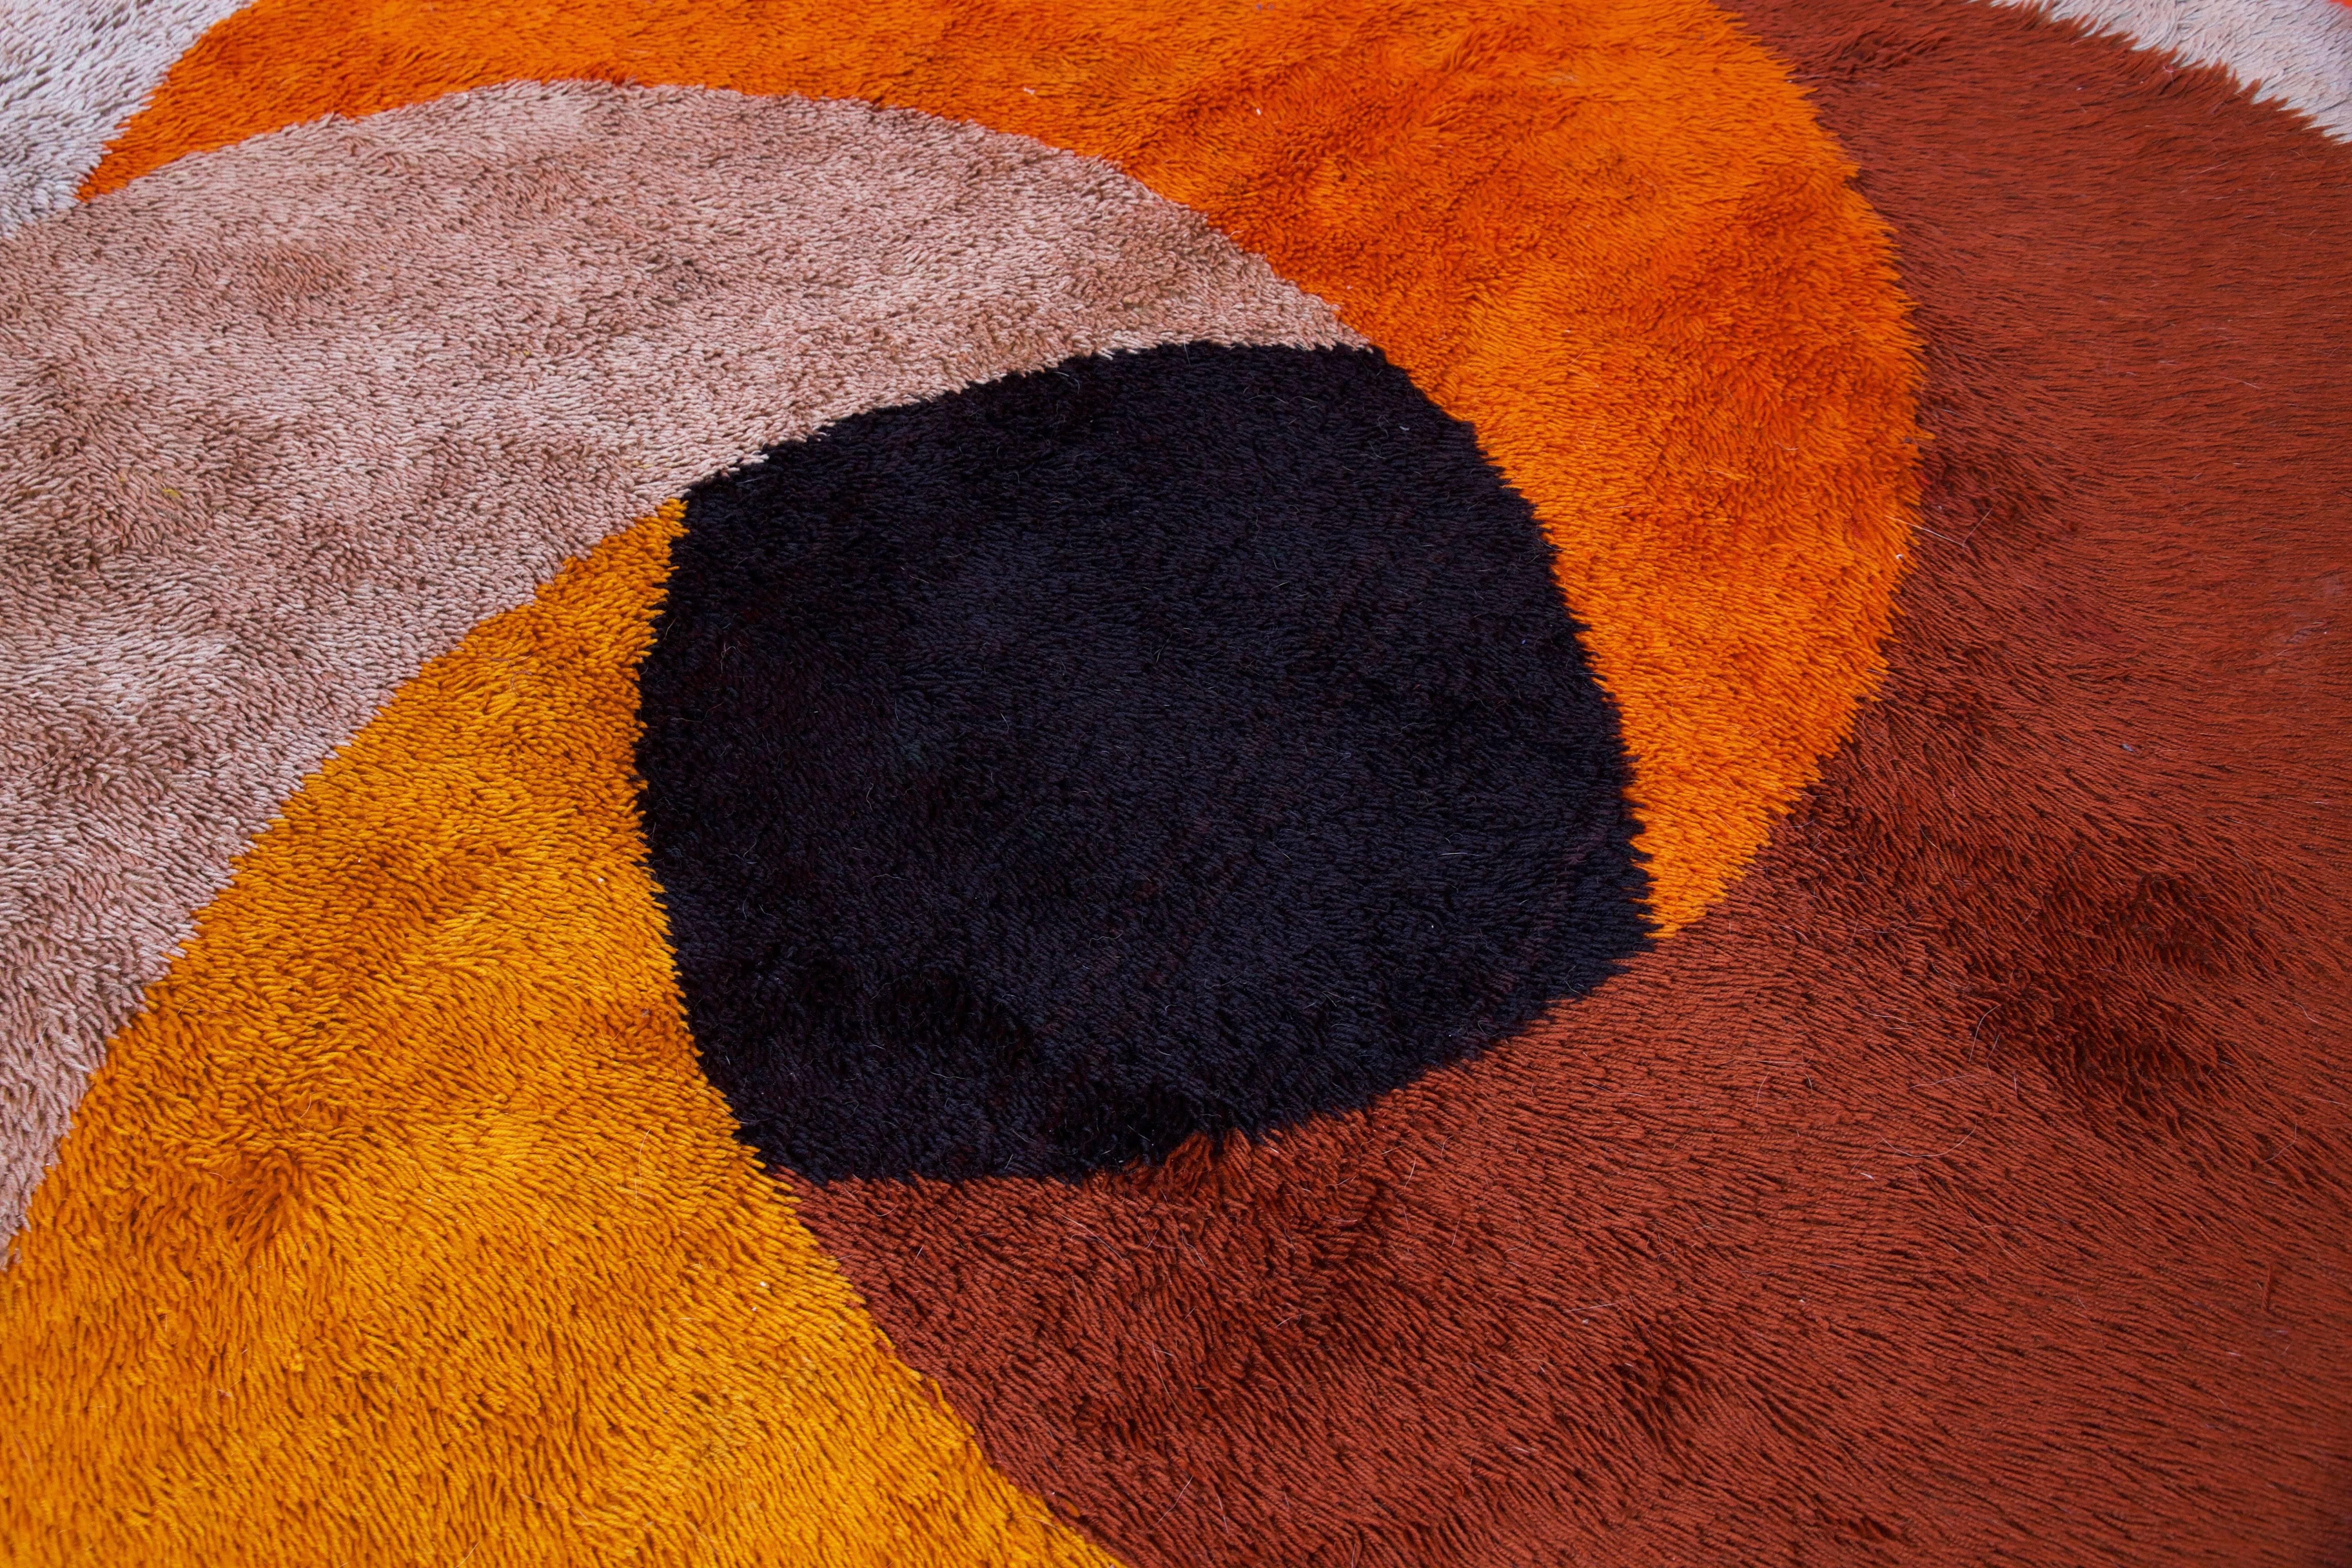 Circular rug in the style of Verner Panton,
circa 1970s. 
Wool
Good original condition.